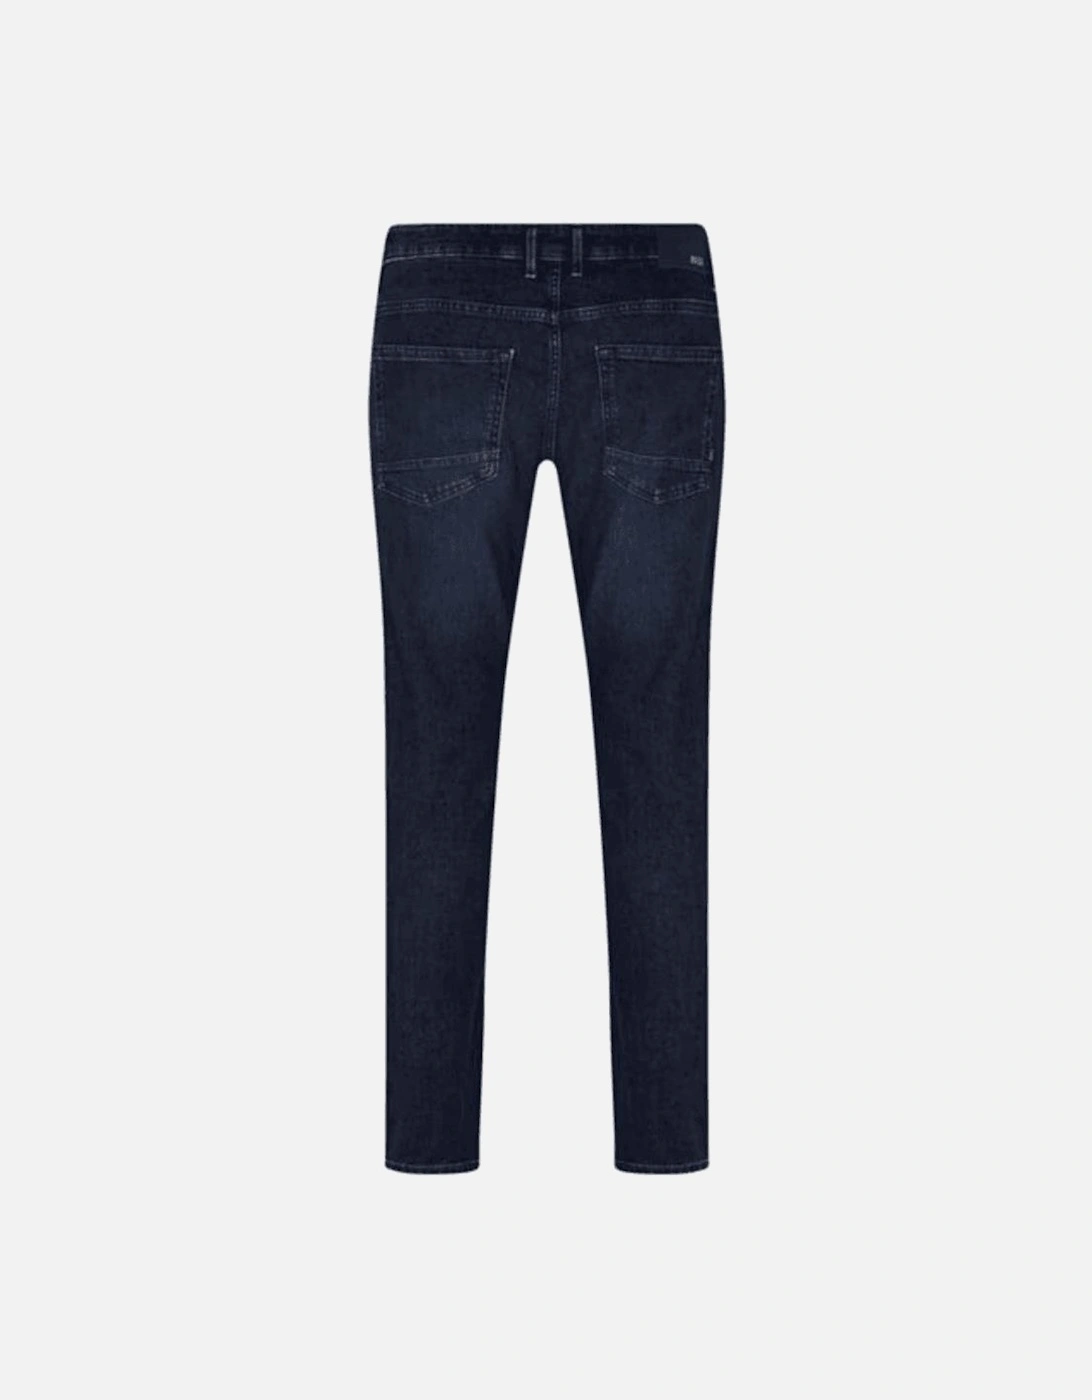 Delano BC-P Slim Tapered Fit Indigo Blue Jeans